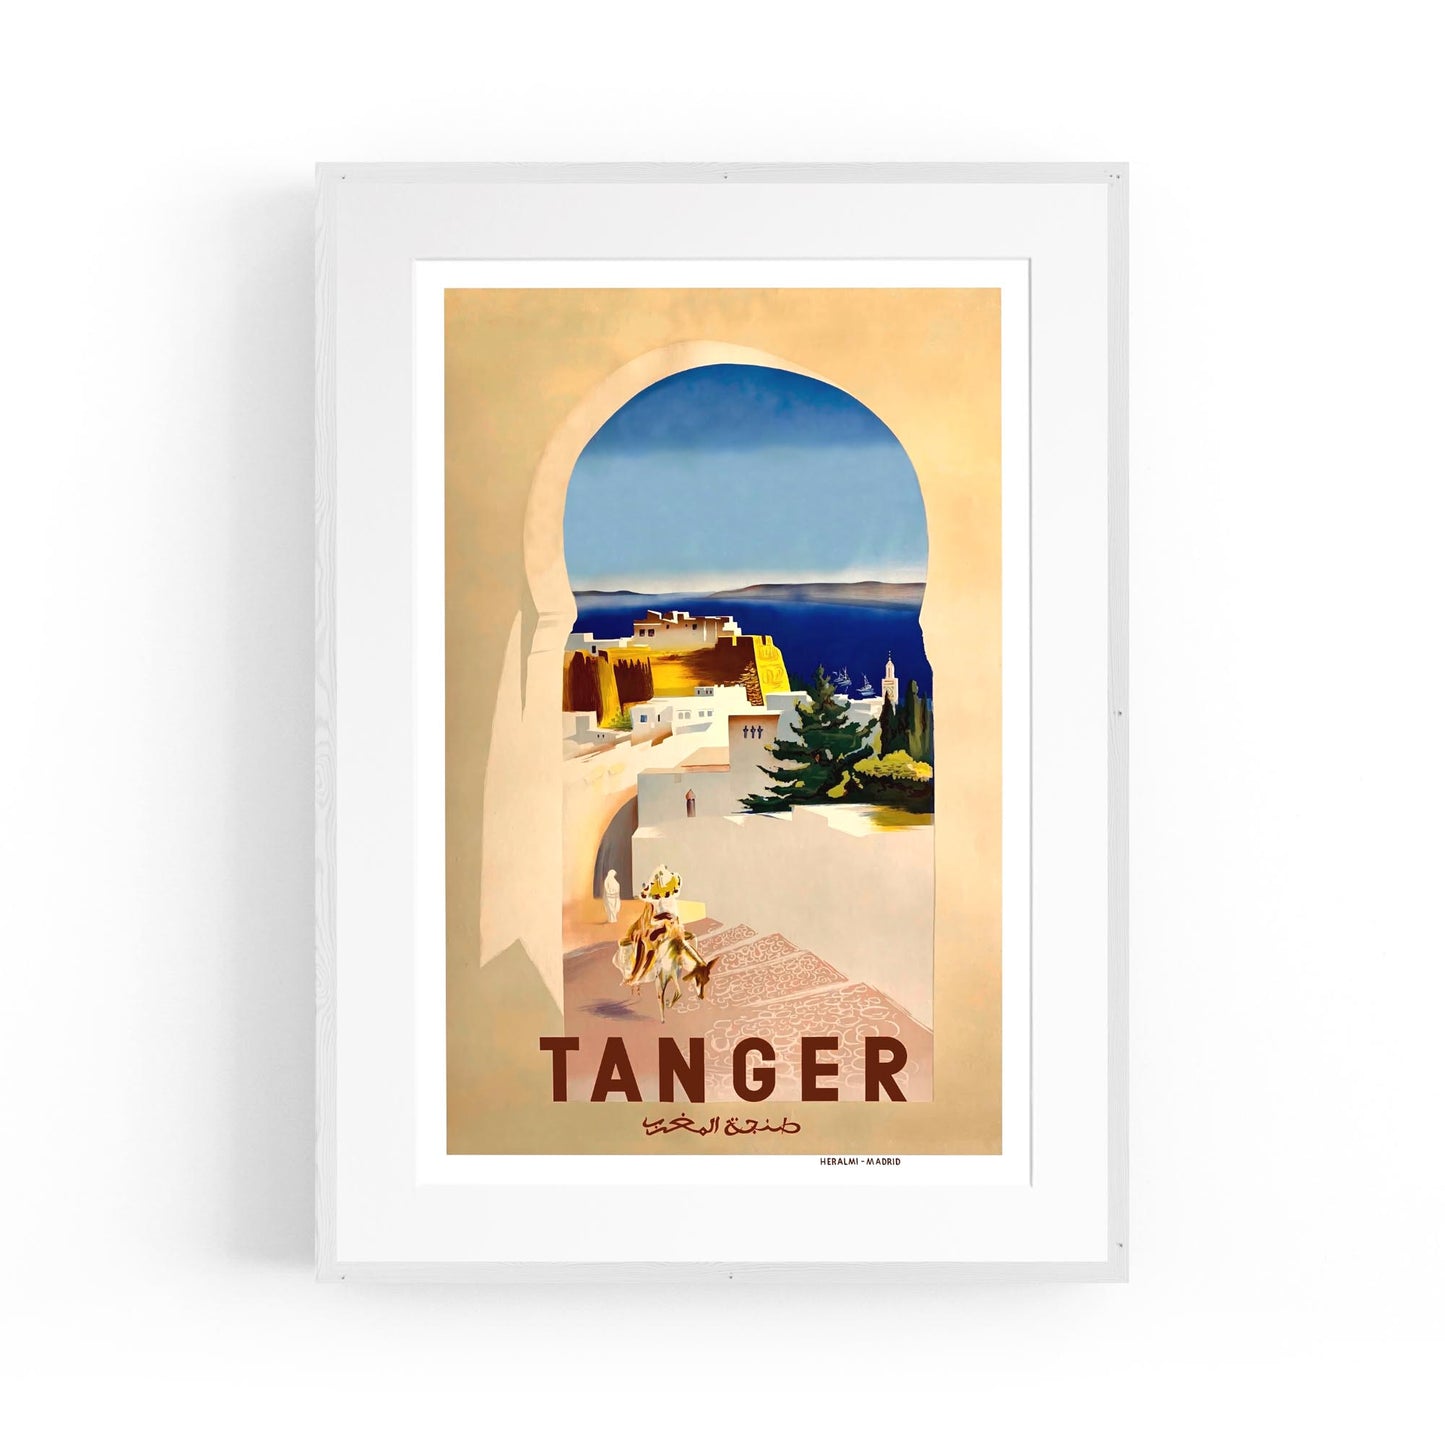 Tanger, Morocco | Framed Vintage Travel Poster